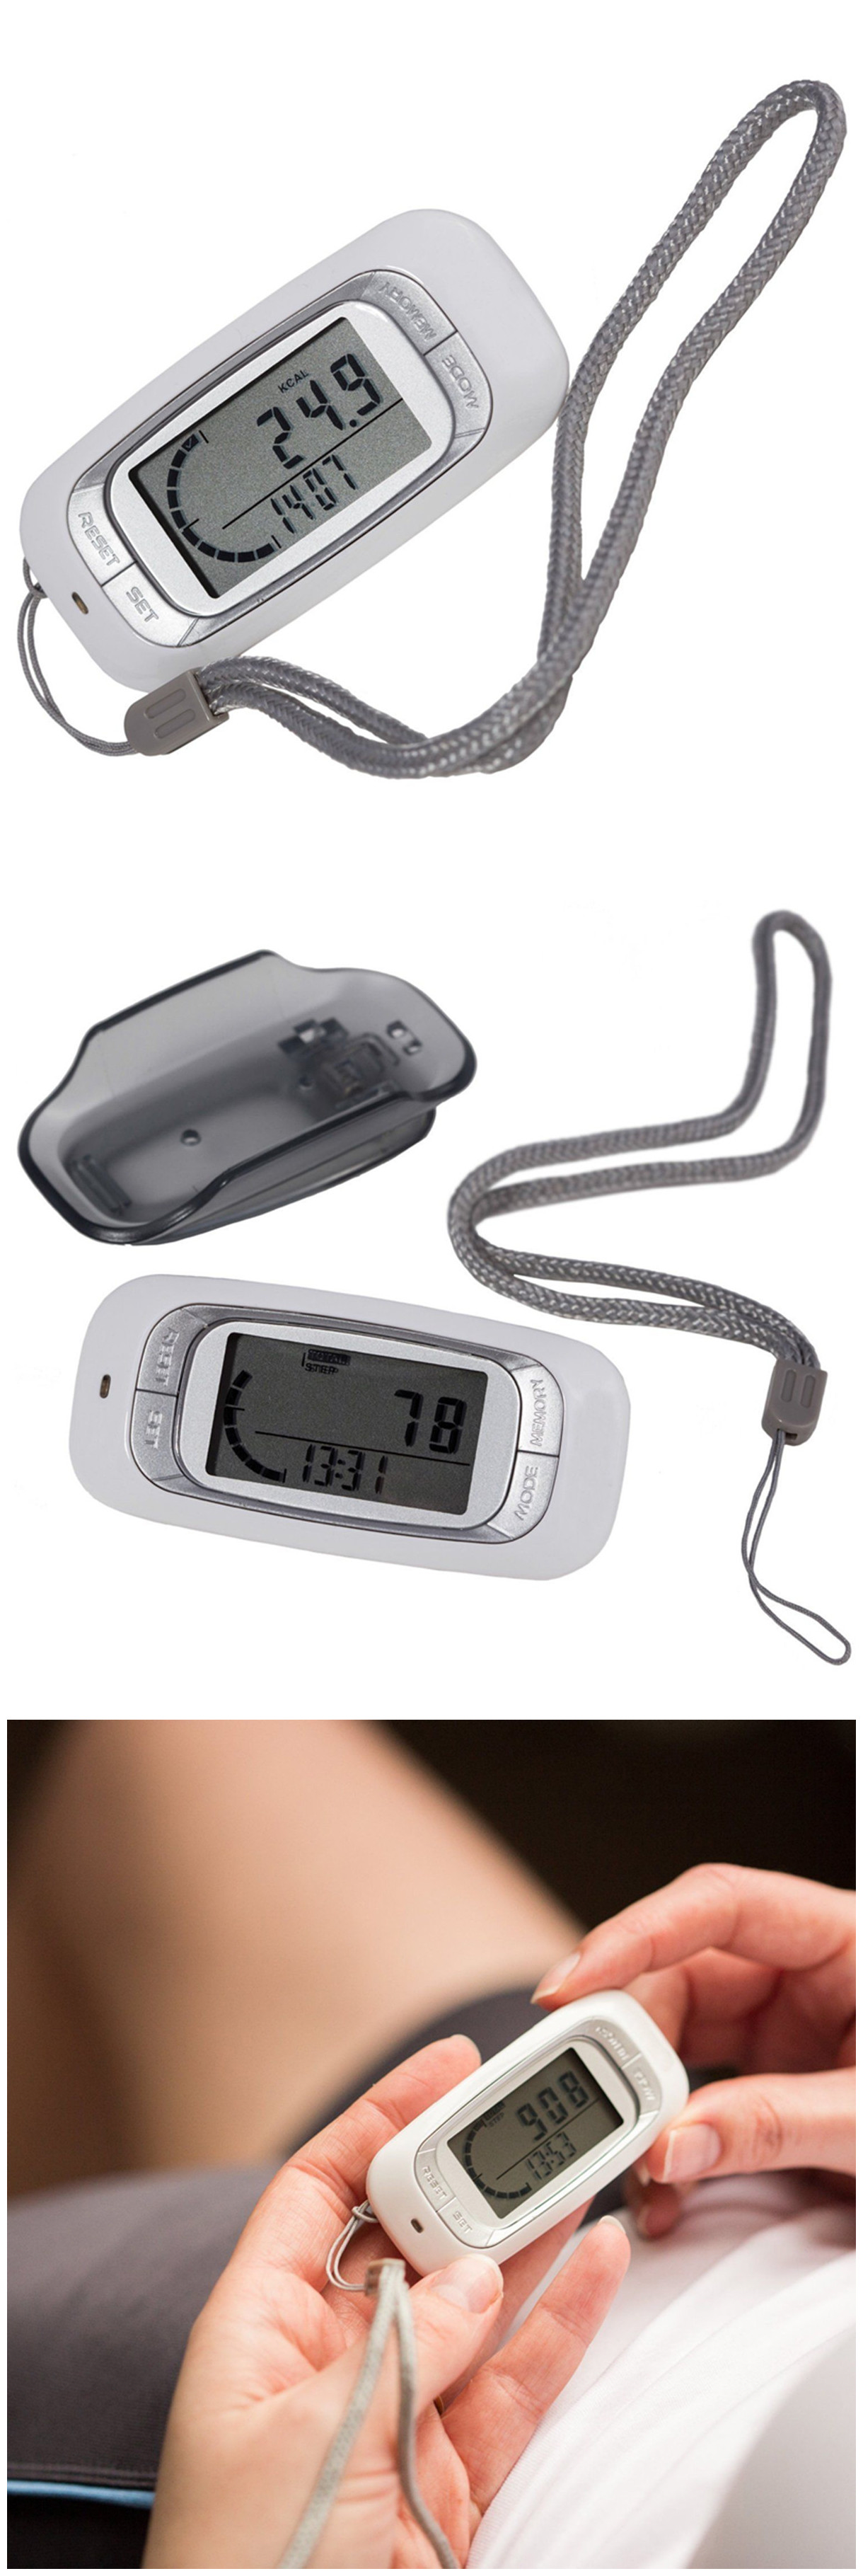 3D-Sensor-Running-Walking-Pedometer-Steps-Counter-Calorie-Burnt-Calculator-986090